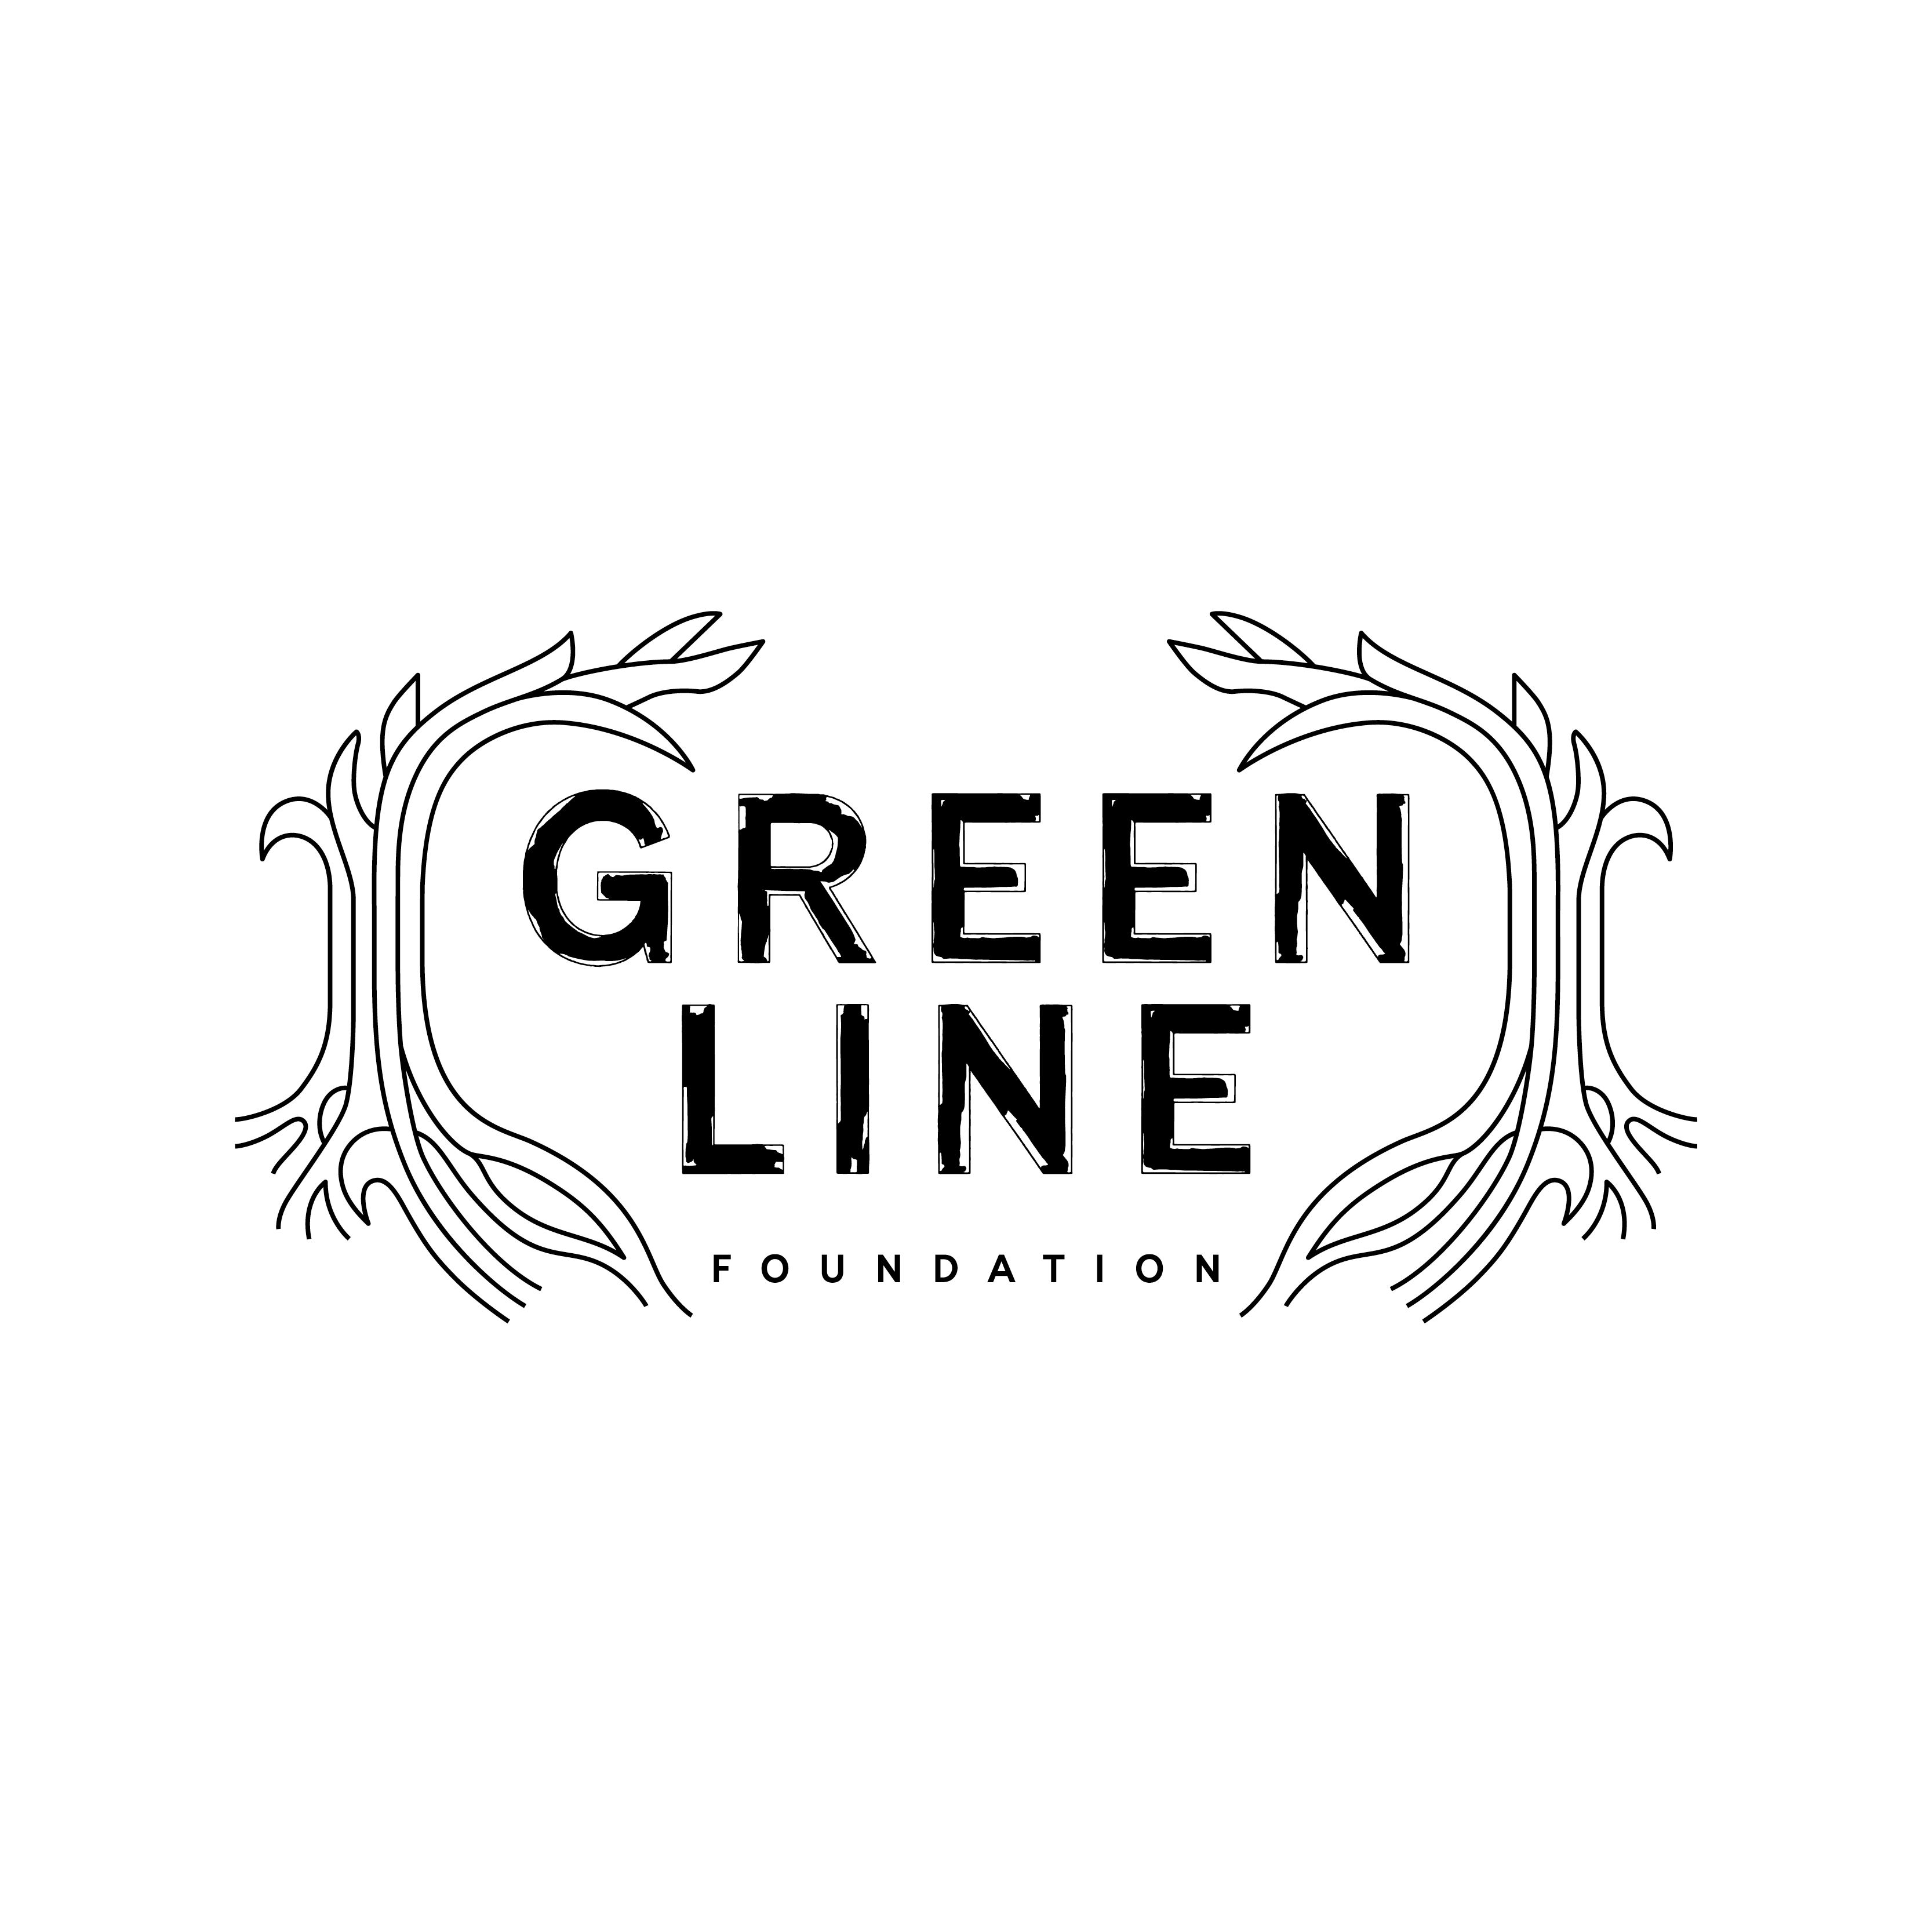 Greenline Foundation